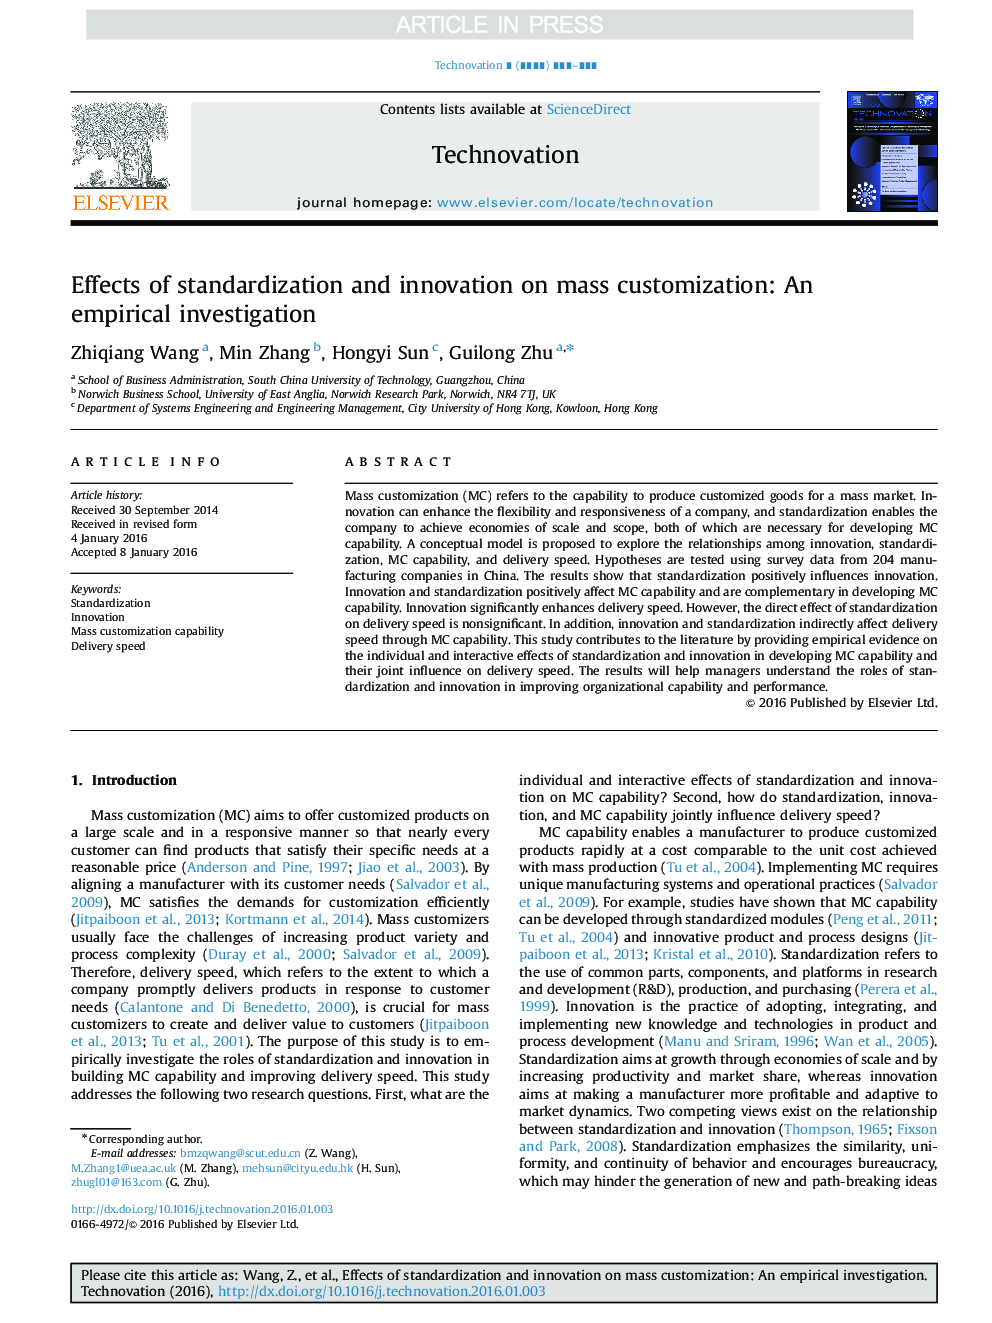 Effects of standardization and innovation on mass customization: An empirical investigation